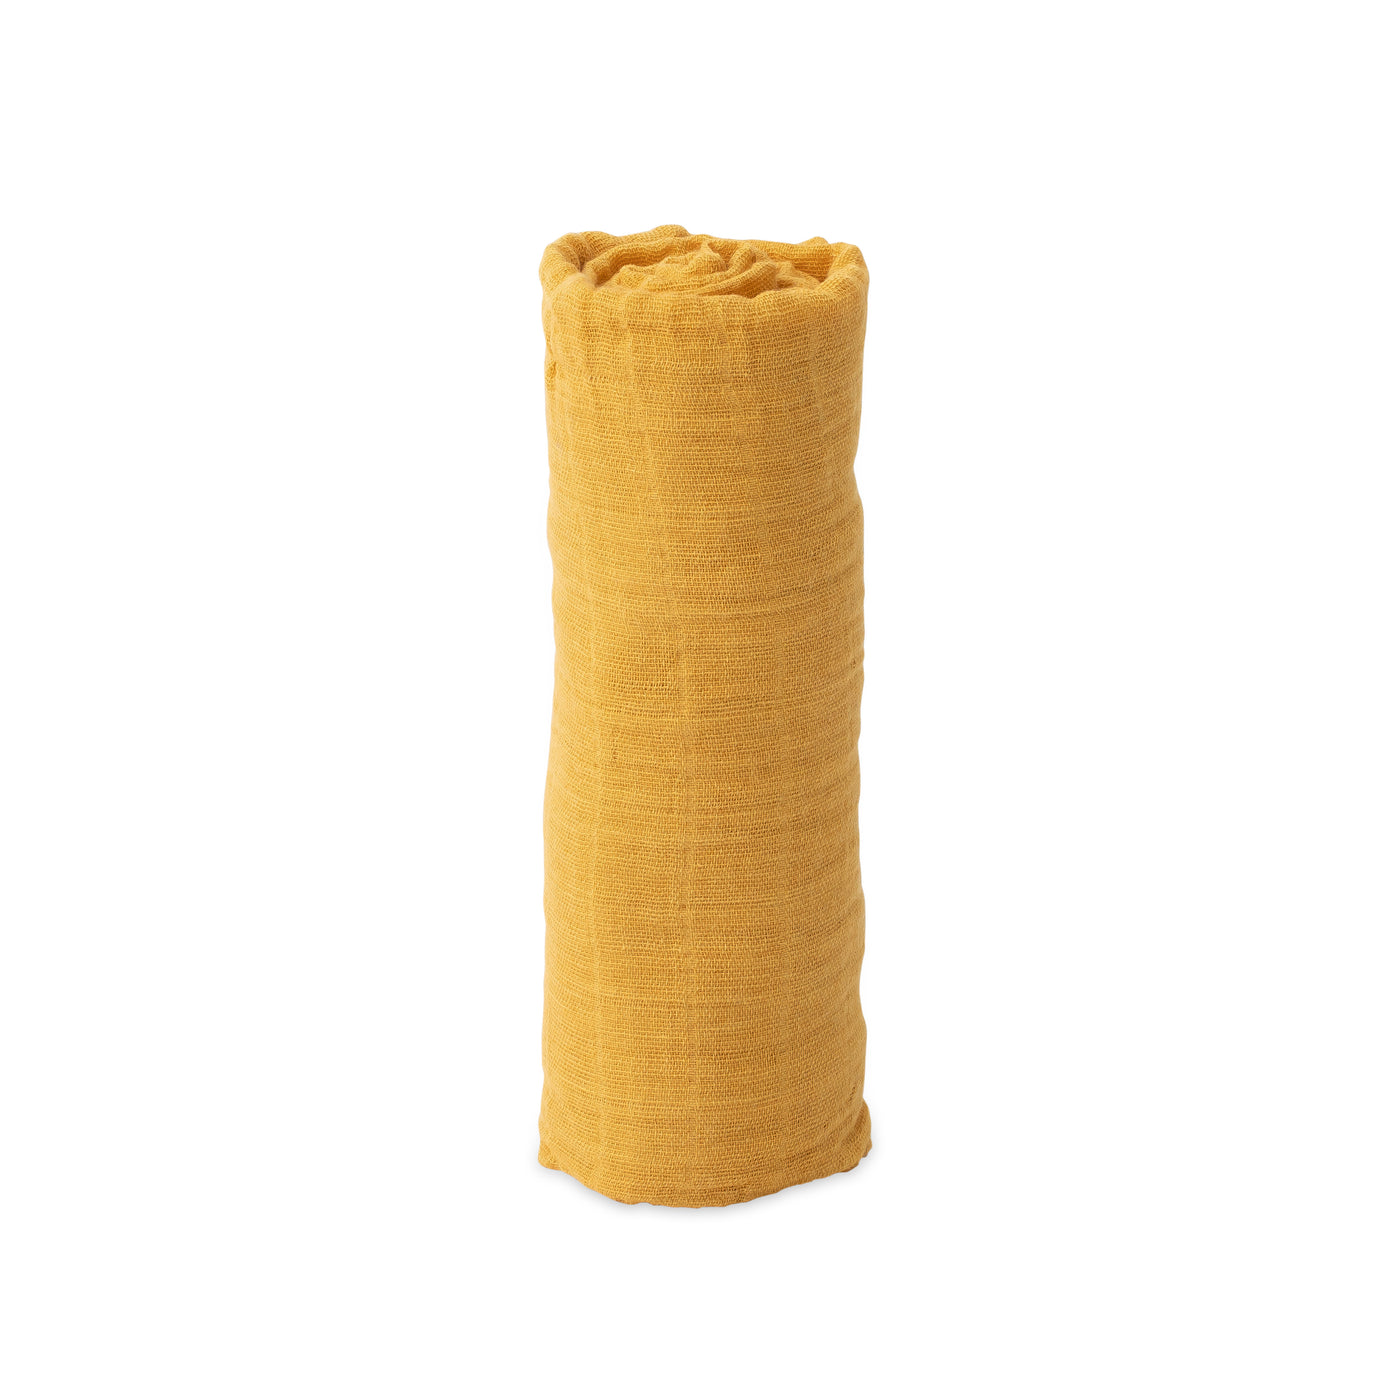 Single Cotton Muslin Swaddle - Mustard